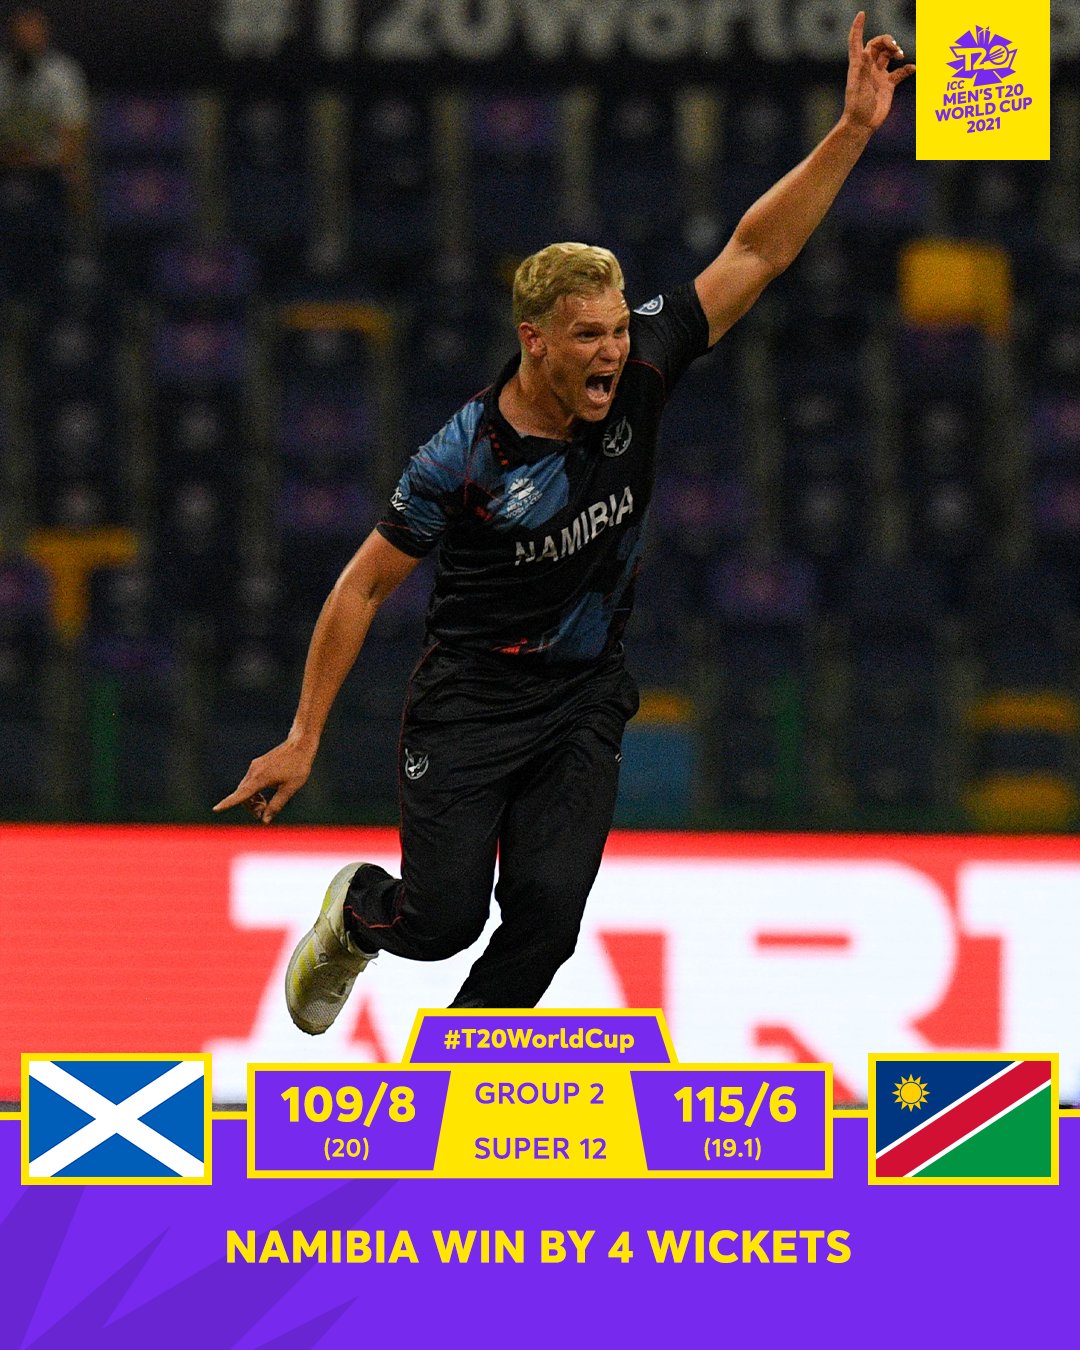 Nam beat Scotland by 4 wickets in Abu Dhabi.